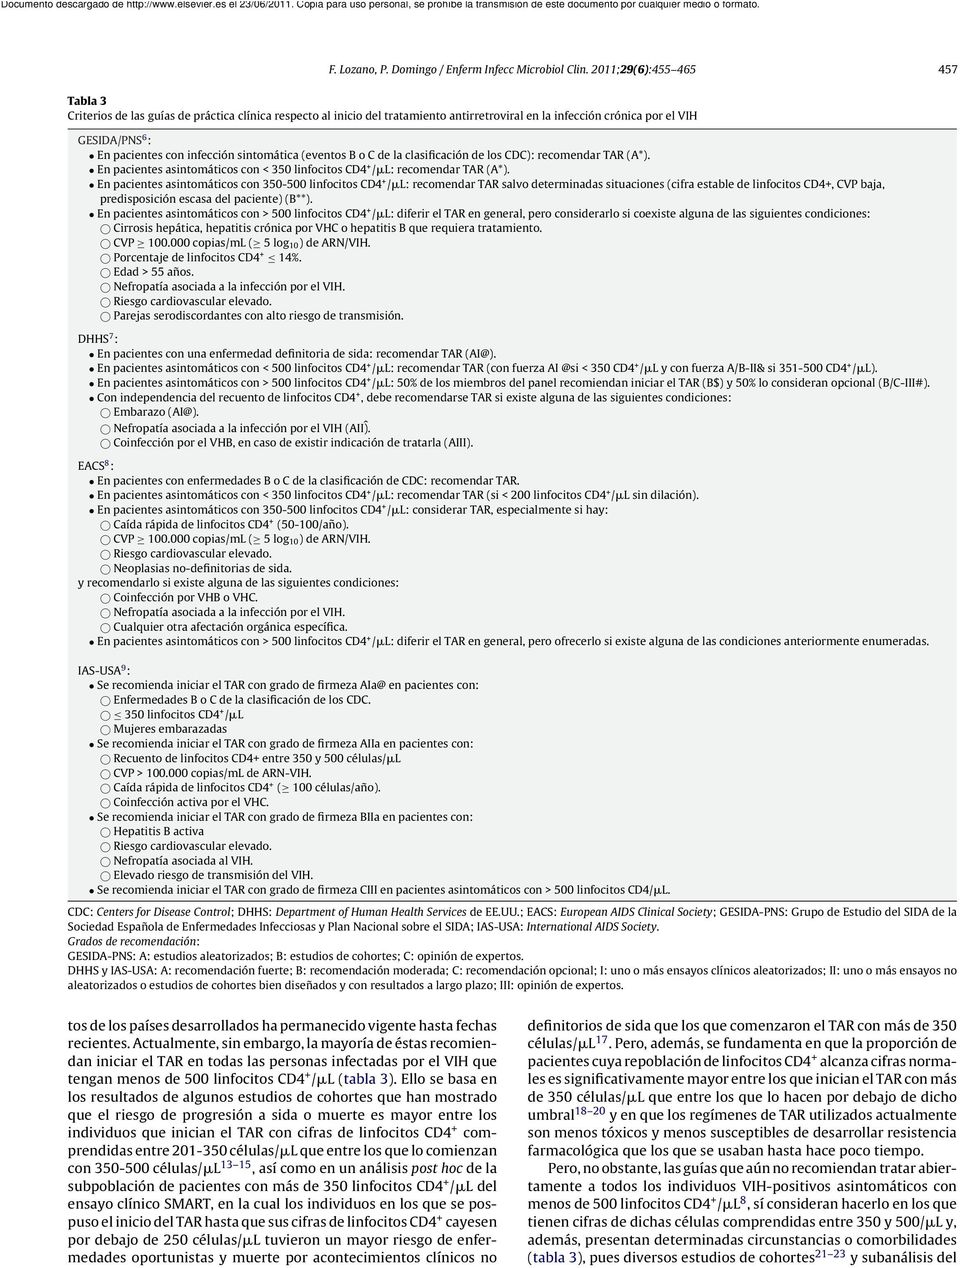 infección sintomática (eventos BoCdelaclasificación de los CDC): recomendar TAR (A*). En pacientes asintomáticos con < 350 linfocitos CD4 + / L: recomendar TAR (A*).